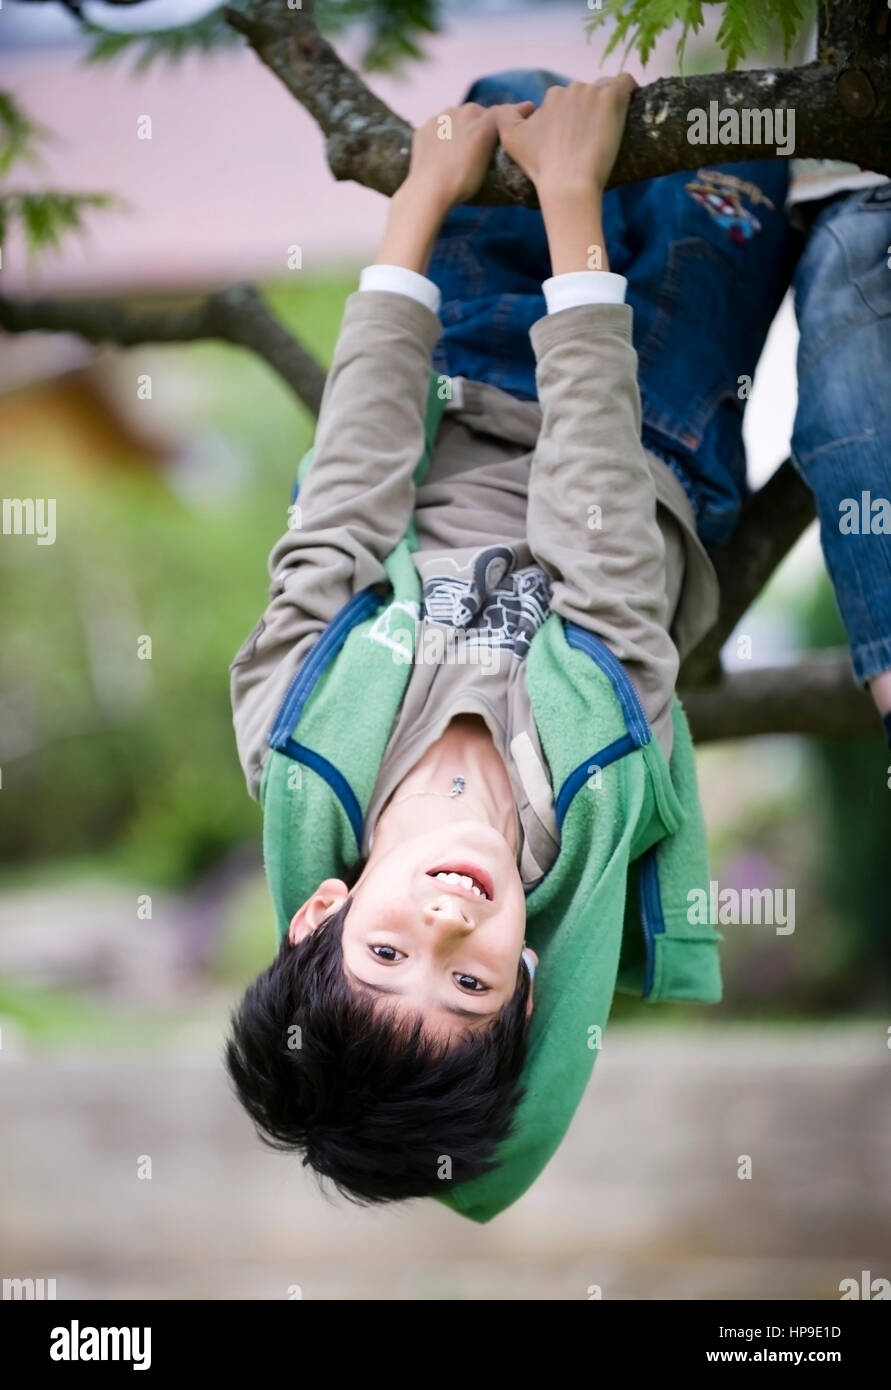 Junge, 8, turnt auf Baum - boy hanging on a tree Stock Photo